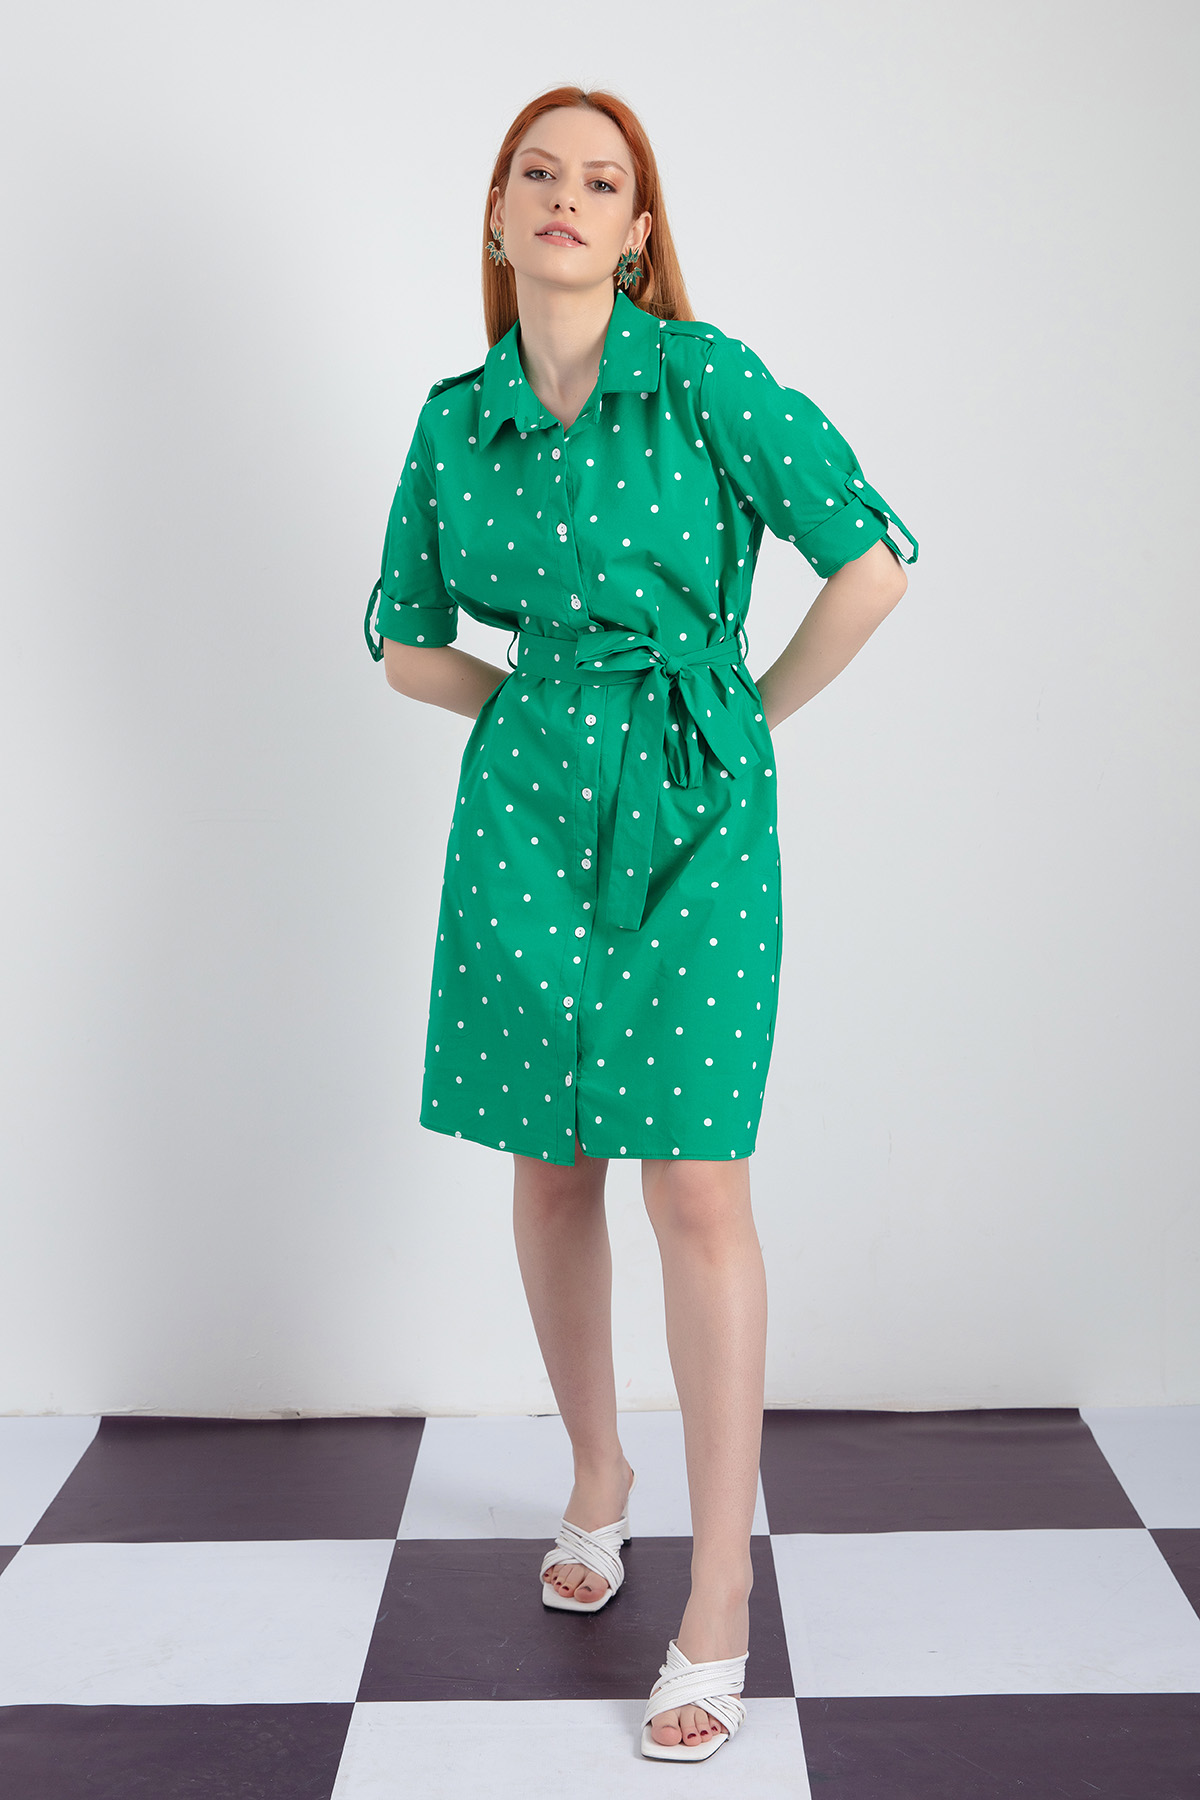 Women's Green Polka Dot Patterned Dress